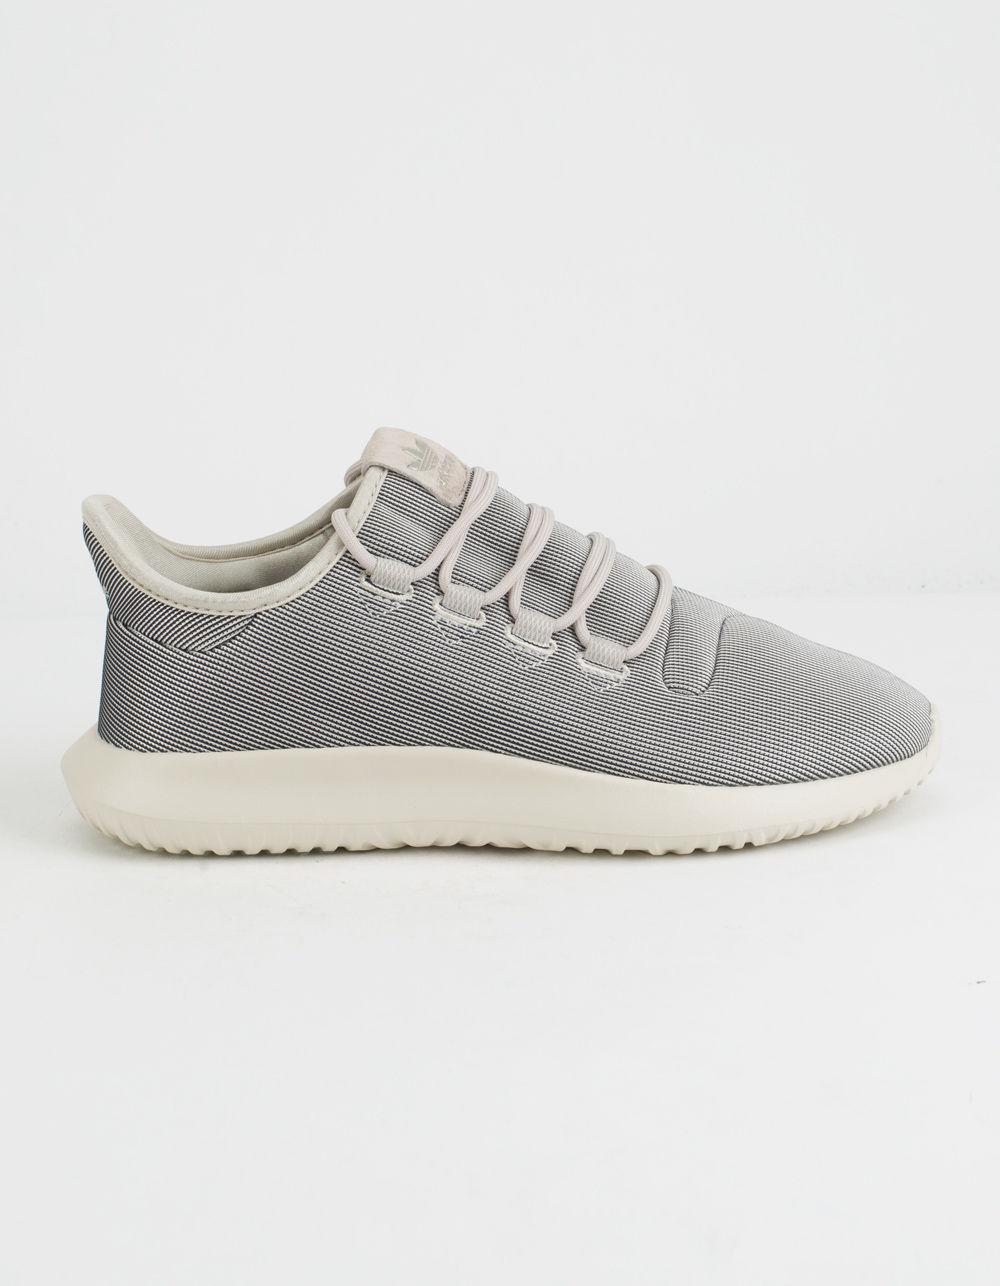 adidas Tubular Shadow Platinum Metallic Womens Shoes in Gray - Lyst